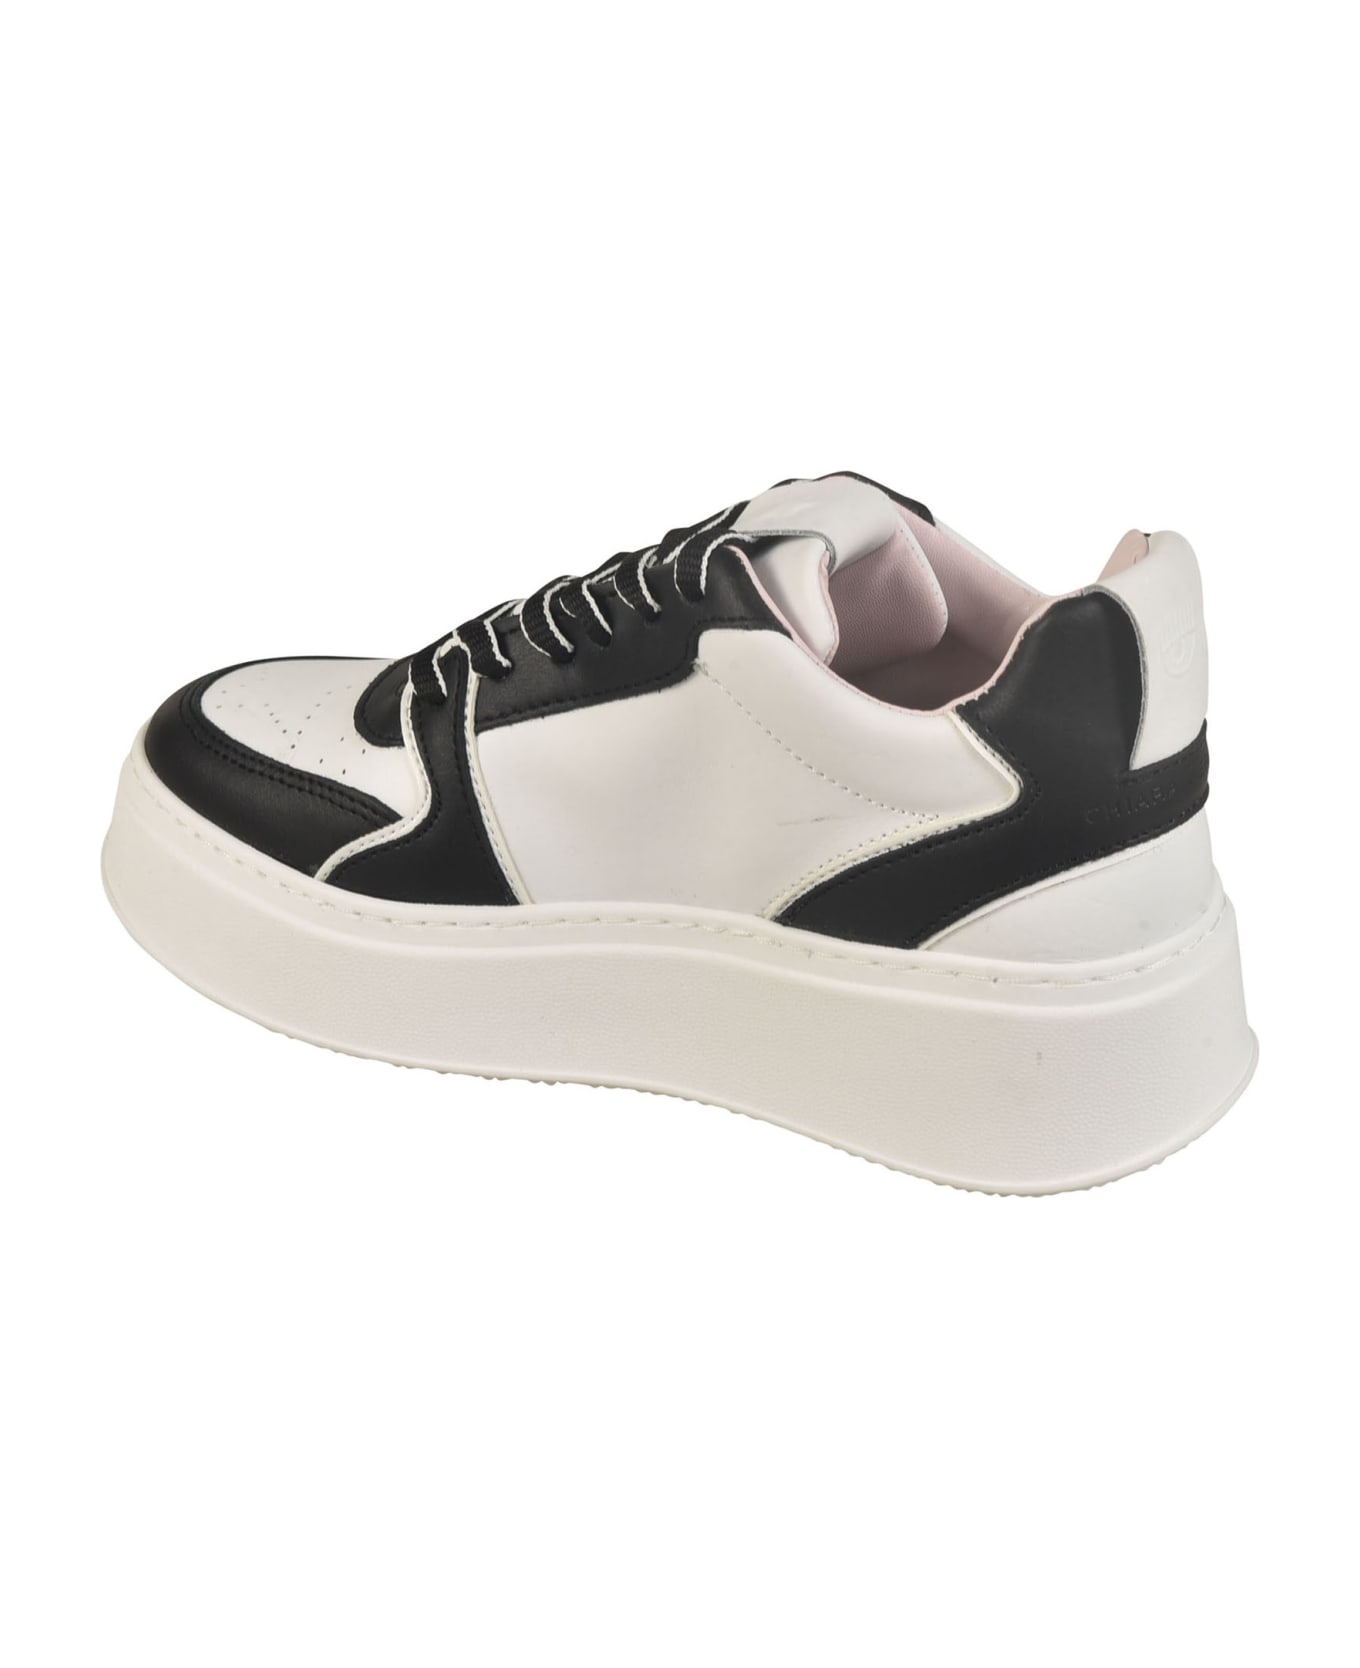 Chiara Ferragni School Sneakers - White/Black ウェッジシューズ